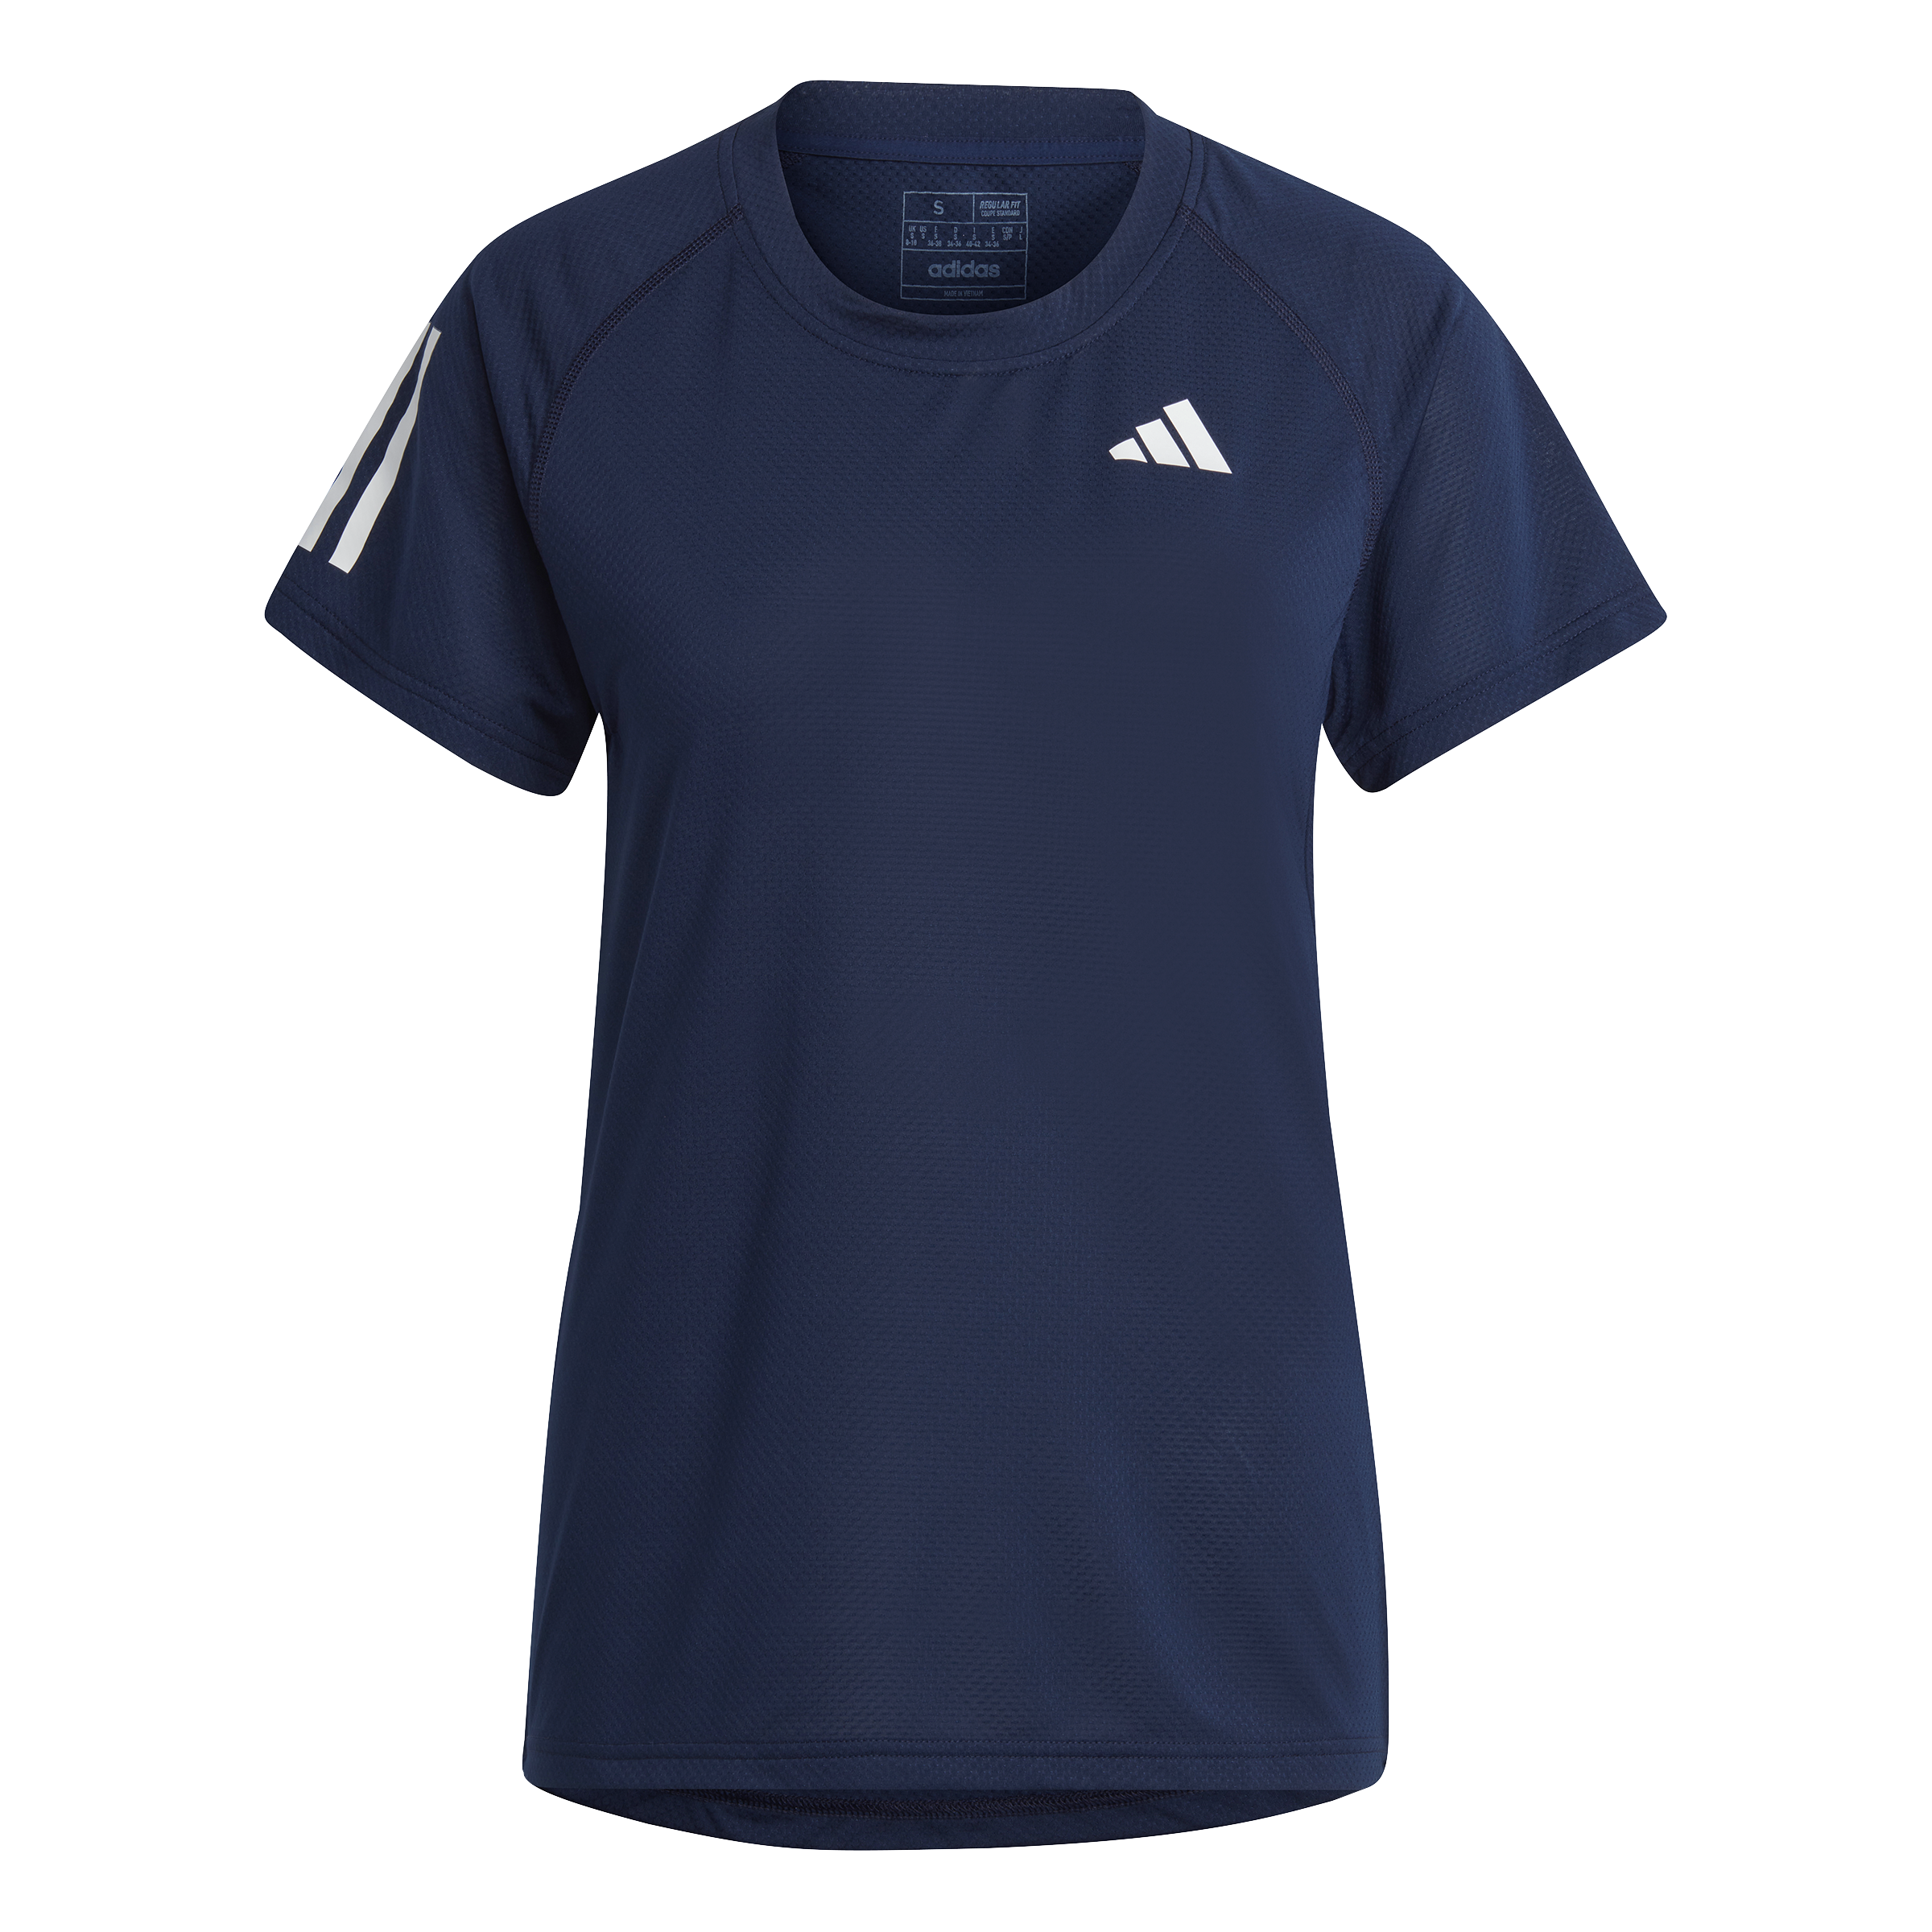 Adidas Club T-shirt Women (Navy)